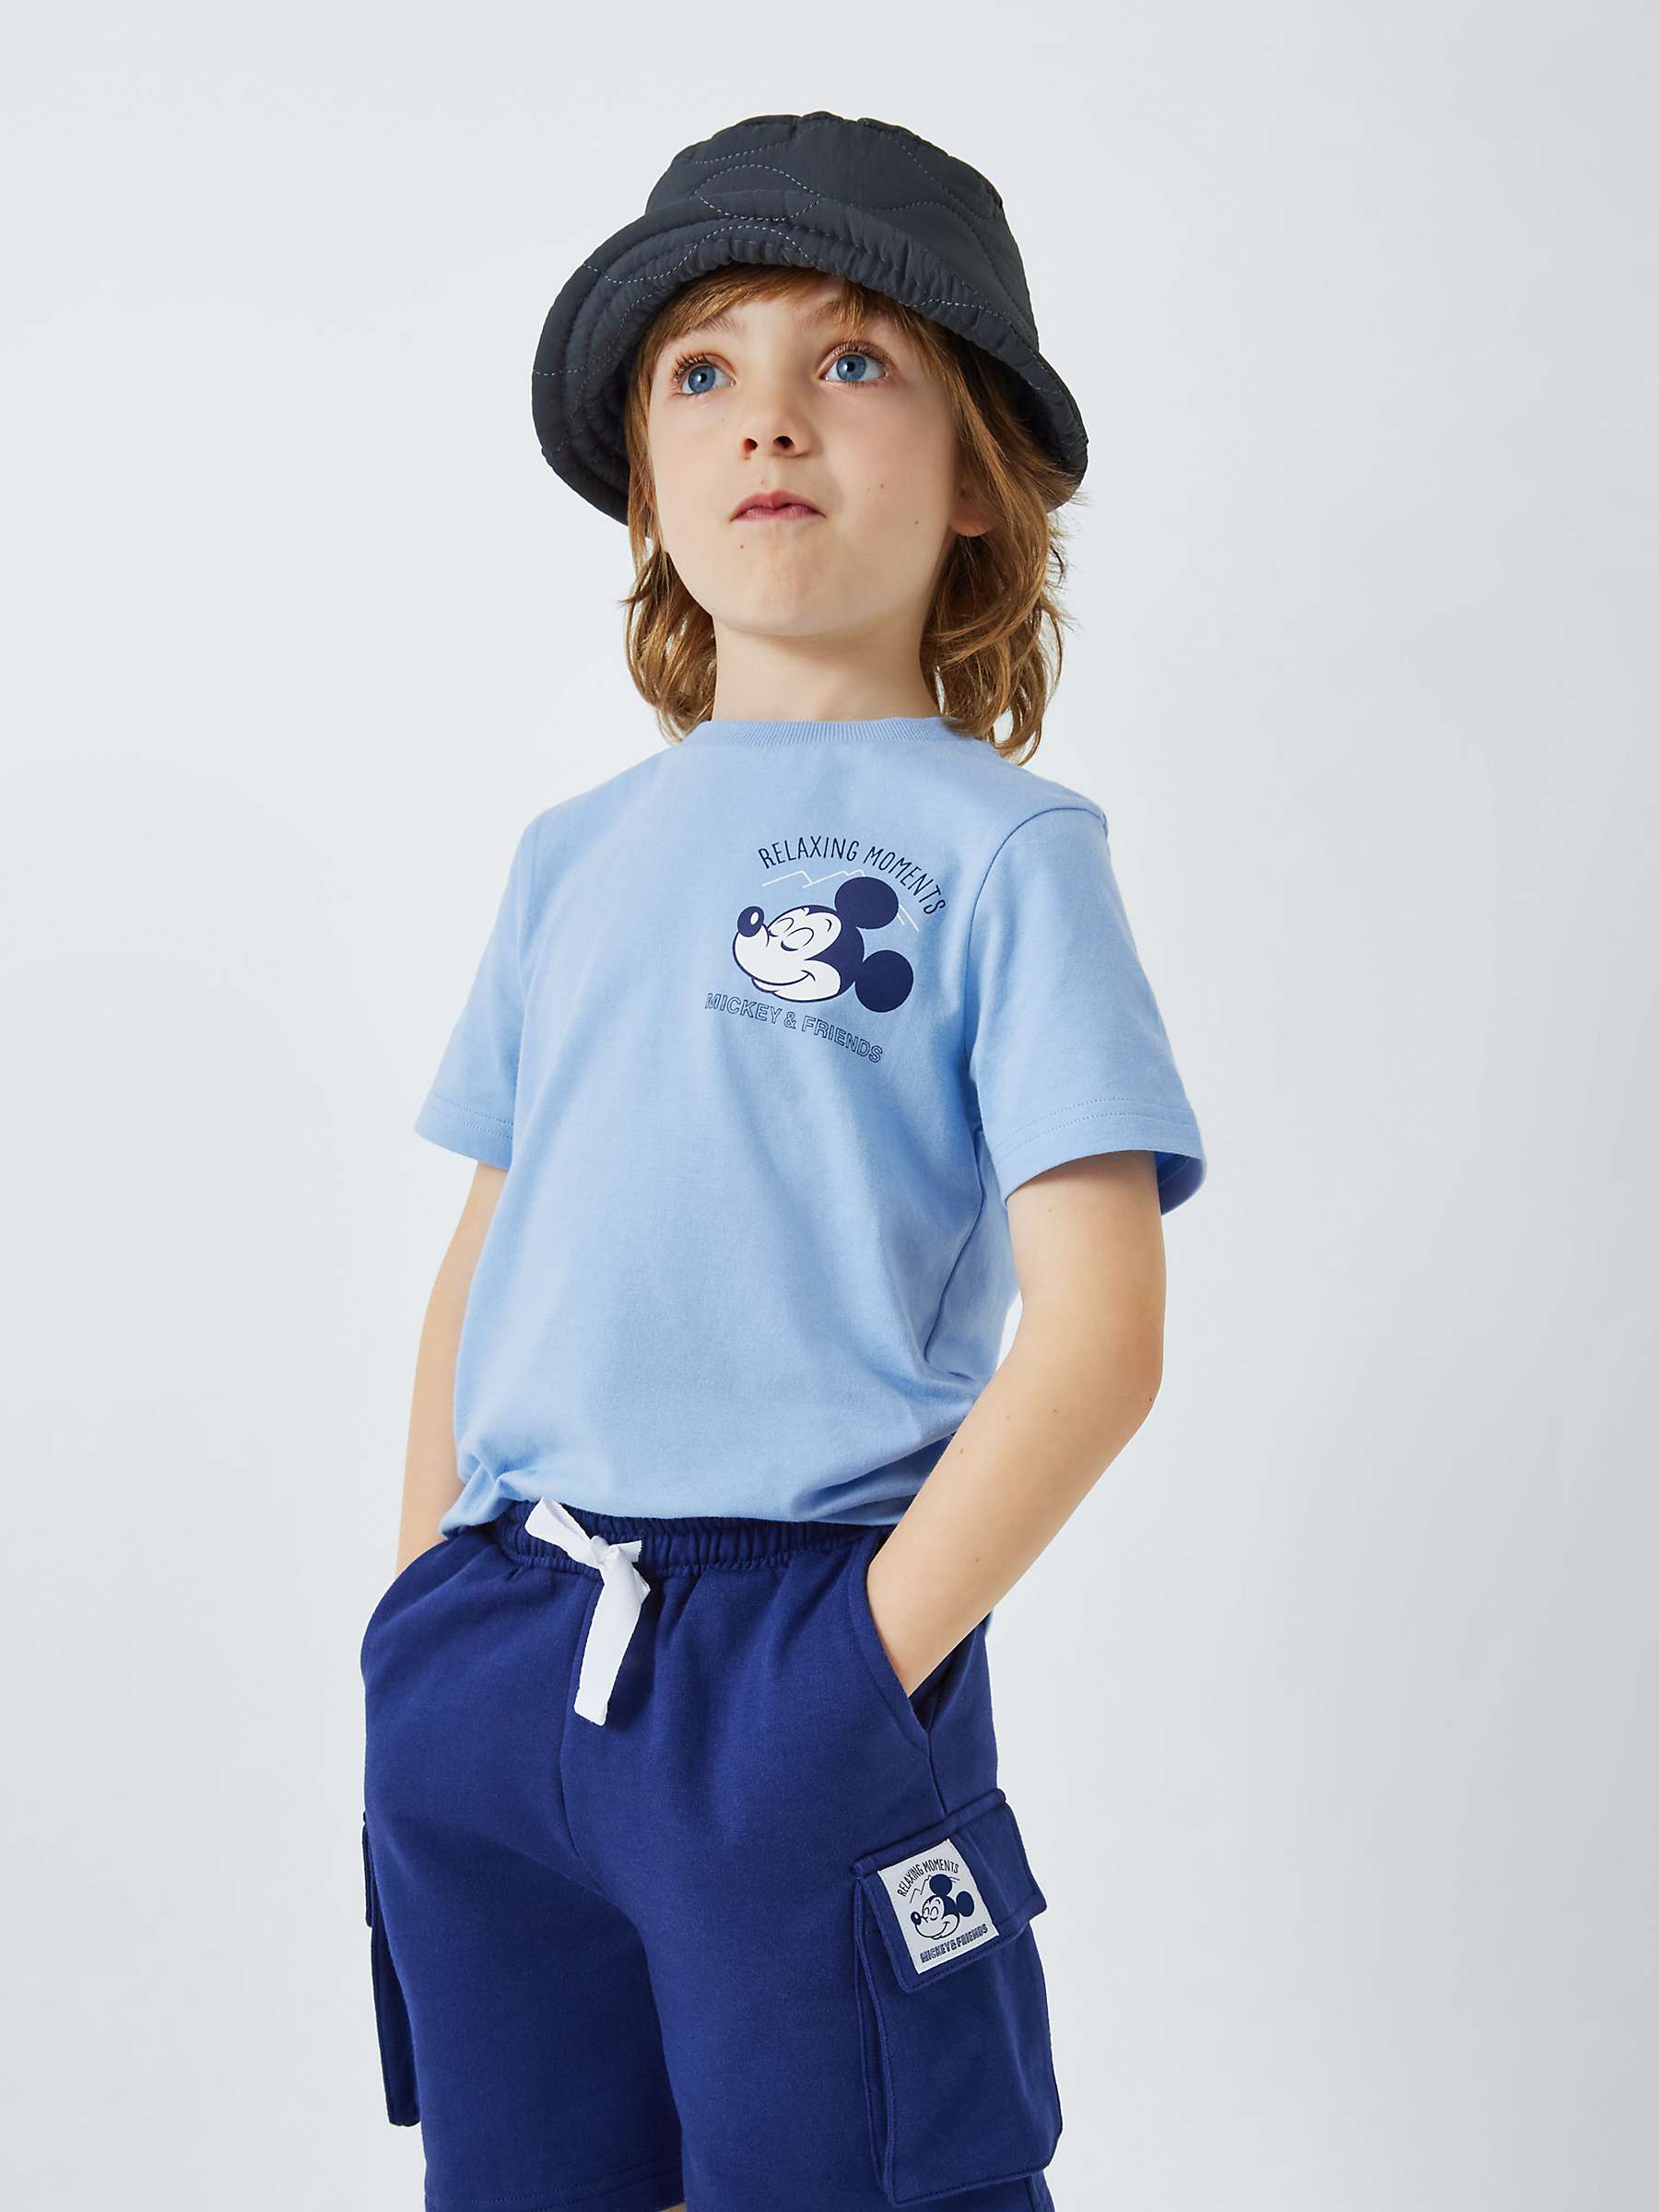 Buy Brand Threads Kids' Disney Mickey Mouse T-Shirt & Cargo Shorts Set, Blue Online at johnlewis.com